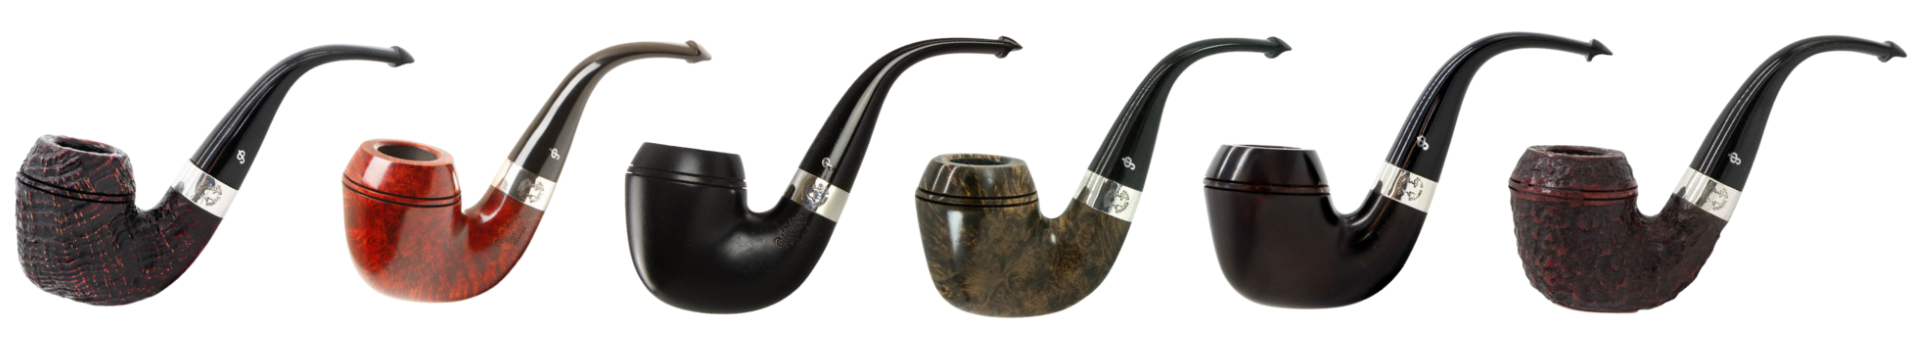 Peterson Sherlock Holmes Watson Tobacco Pipe